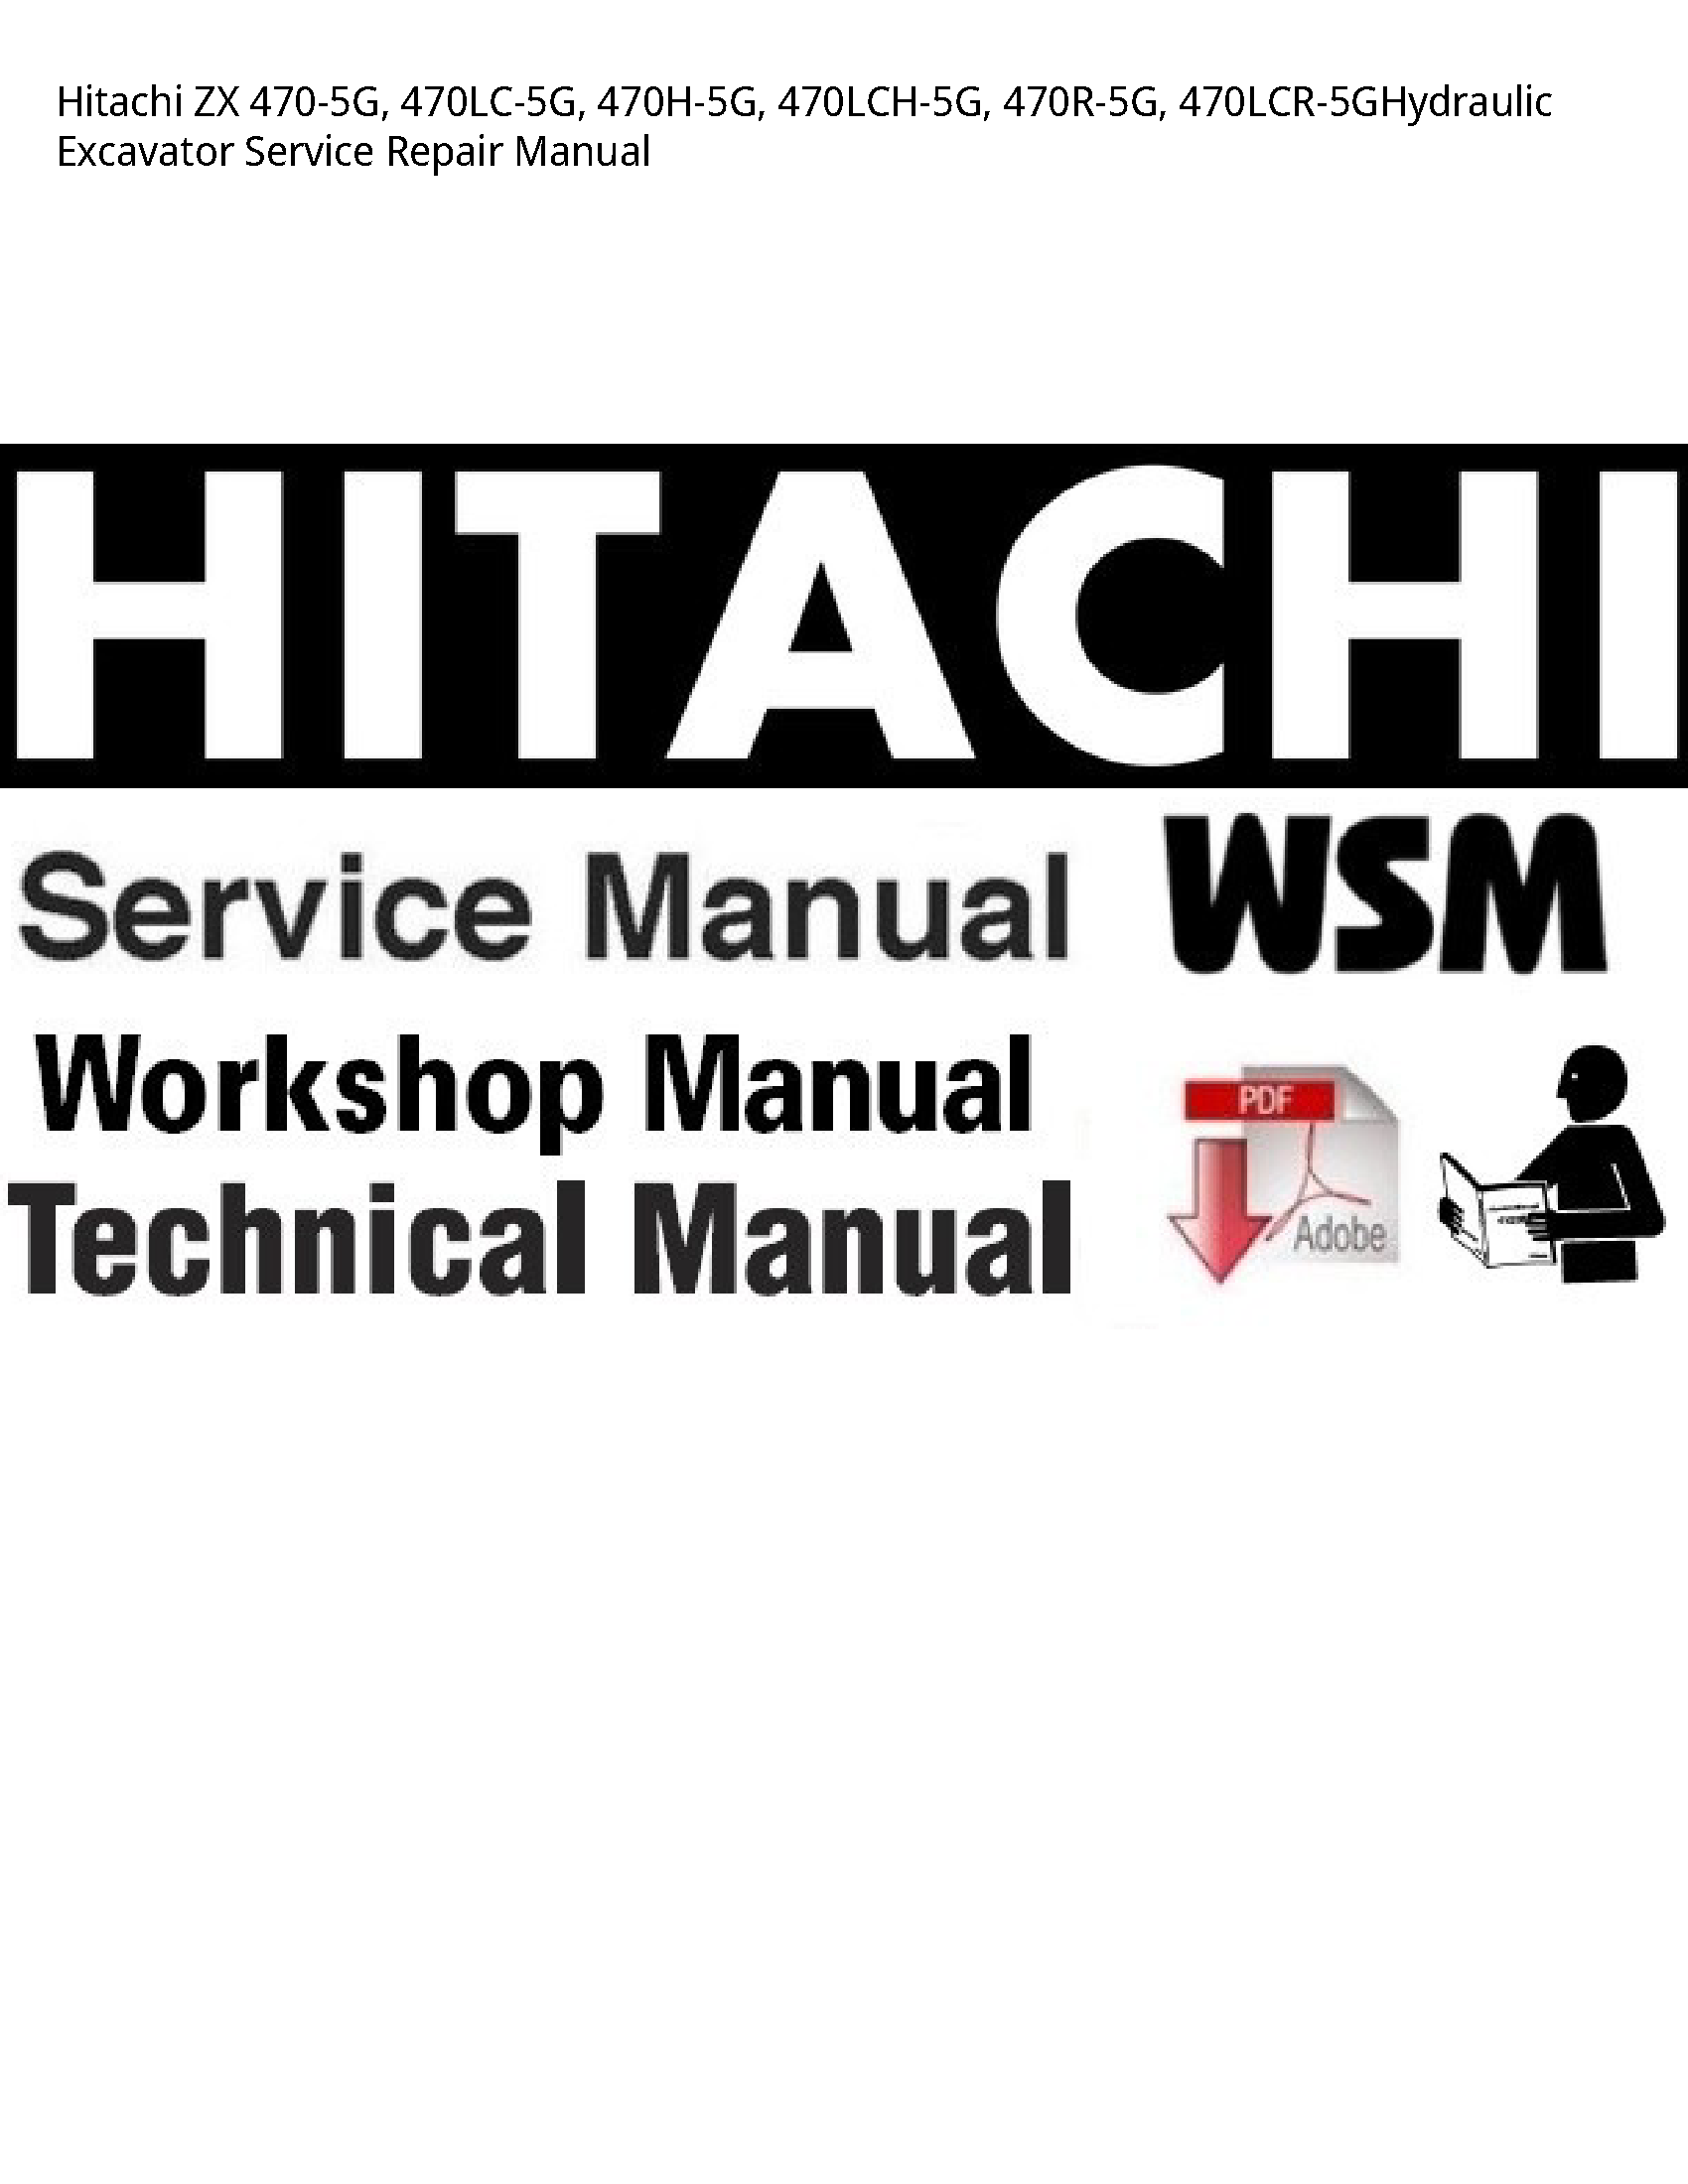 Hitachi 470-5G ZX Excavator manual